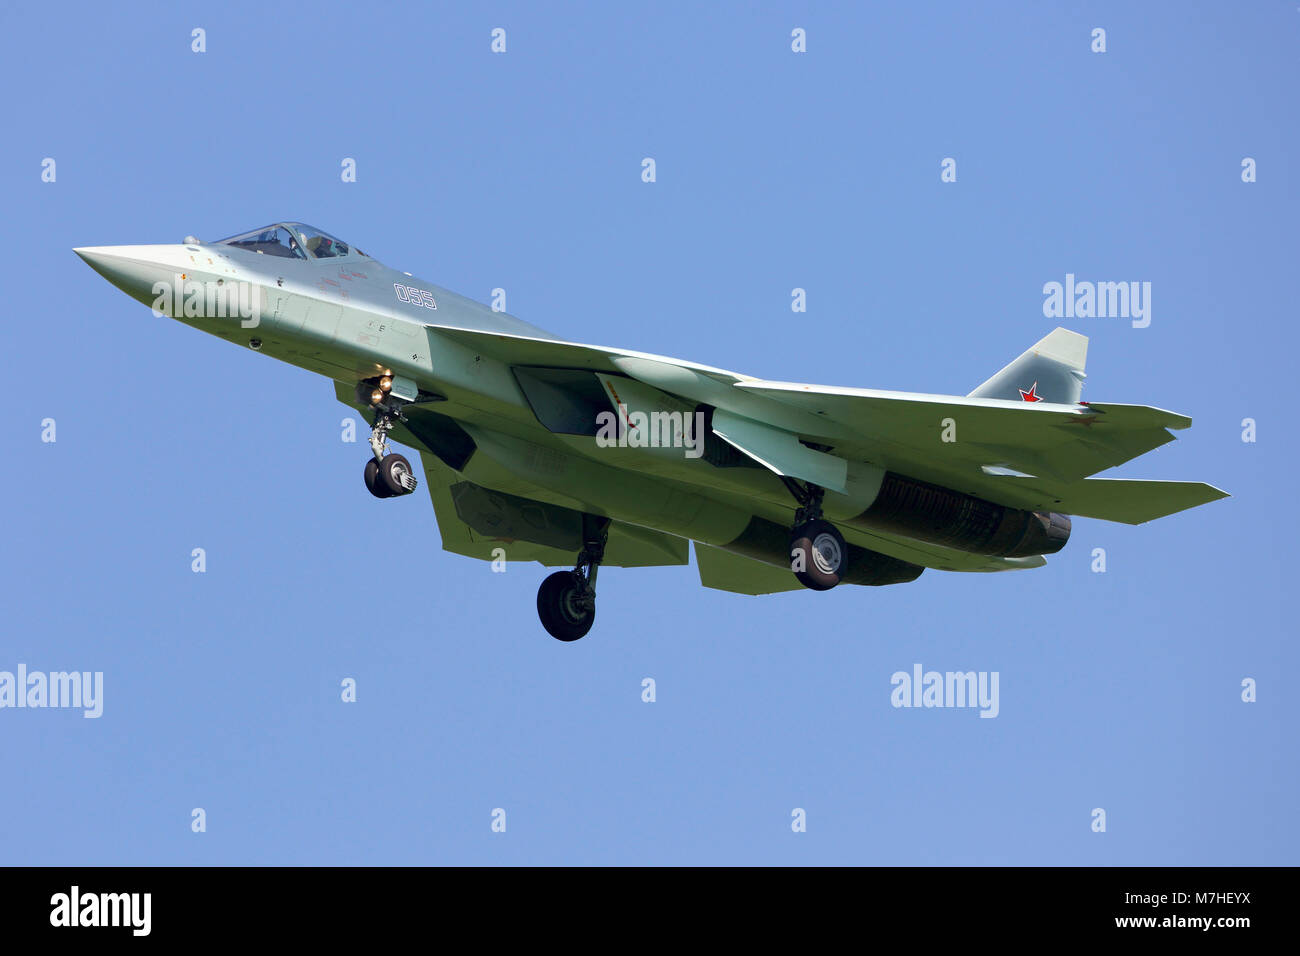 T-50 PAK-FA fifth generation Russian jet fighter landing Stock Photo